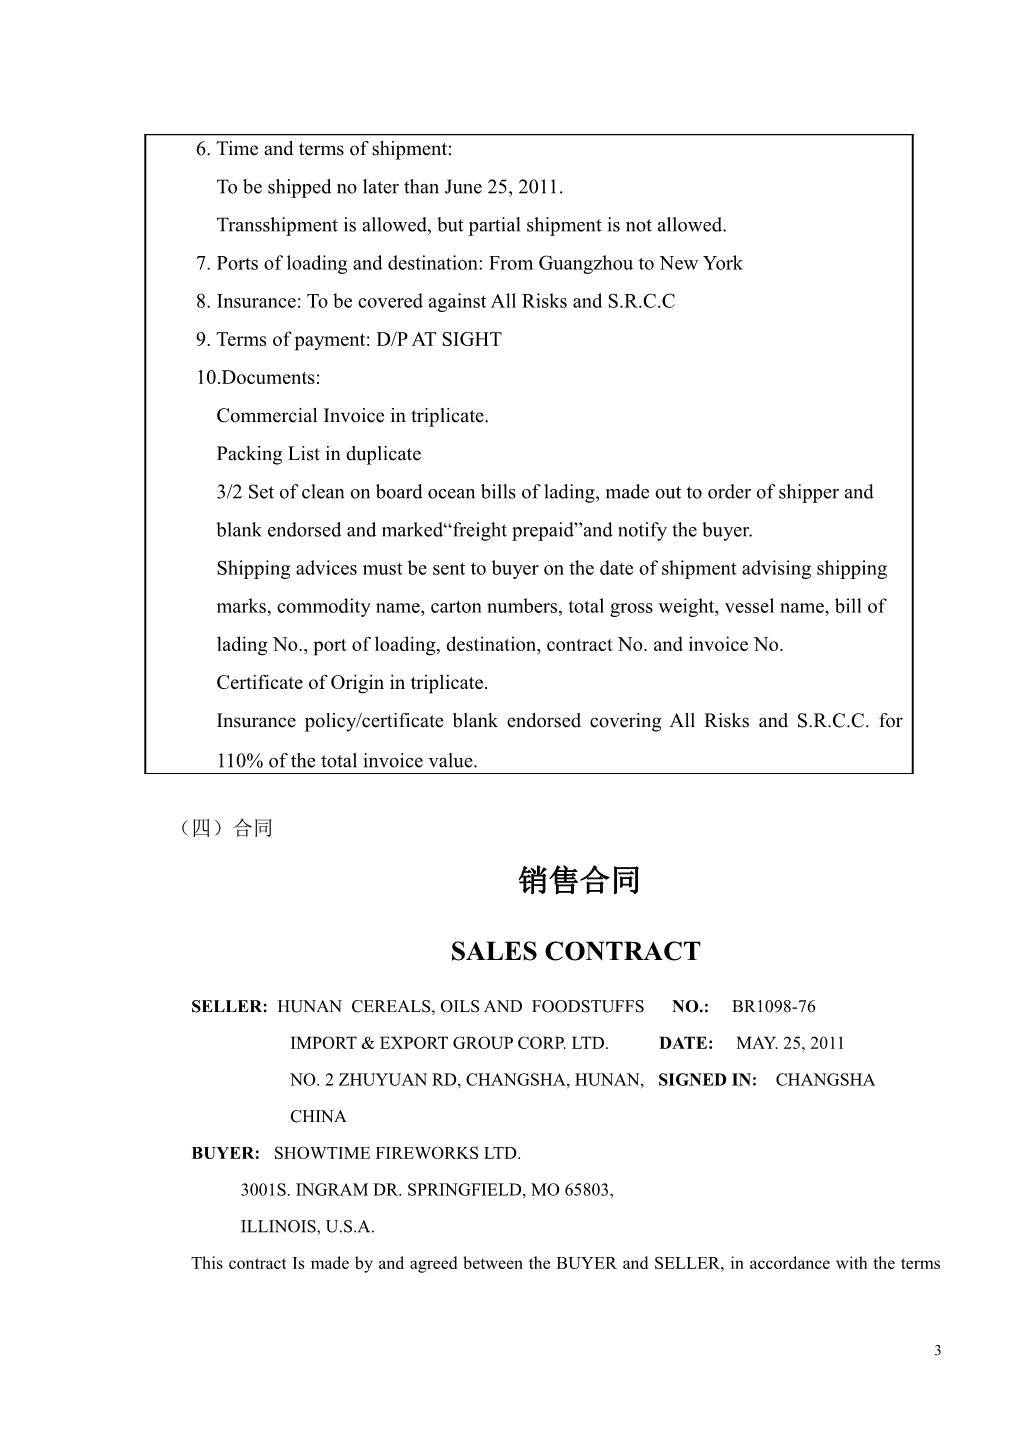 Seller: Hunan Cereals, Oils and Foodstuffs No.: Br1098-76